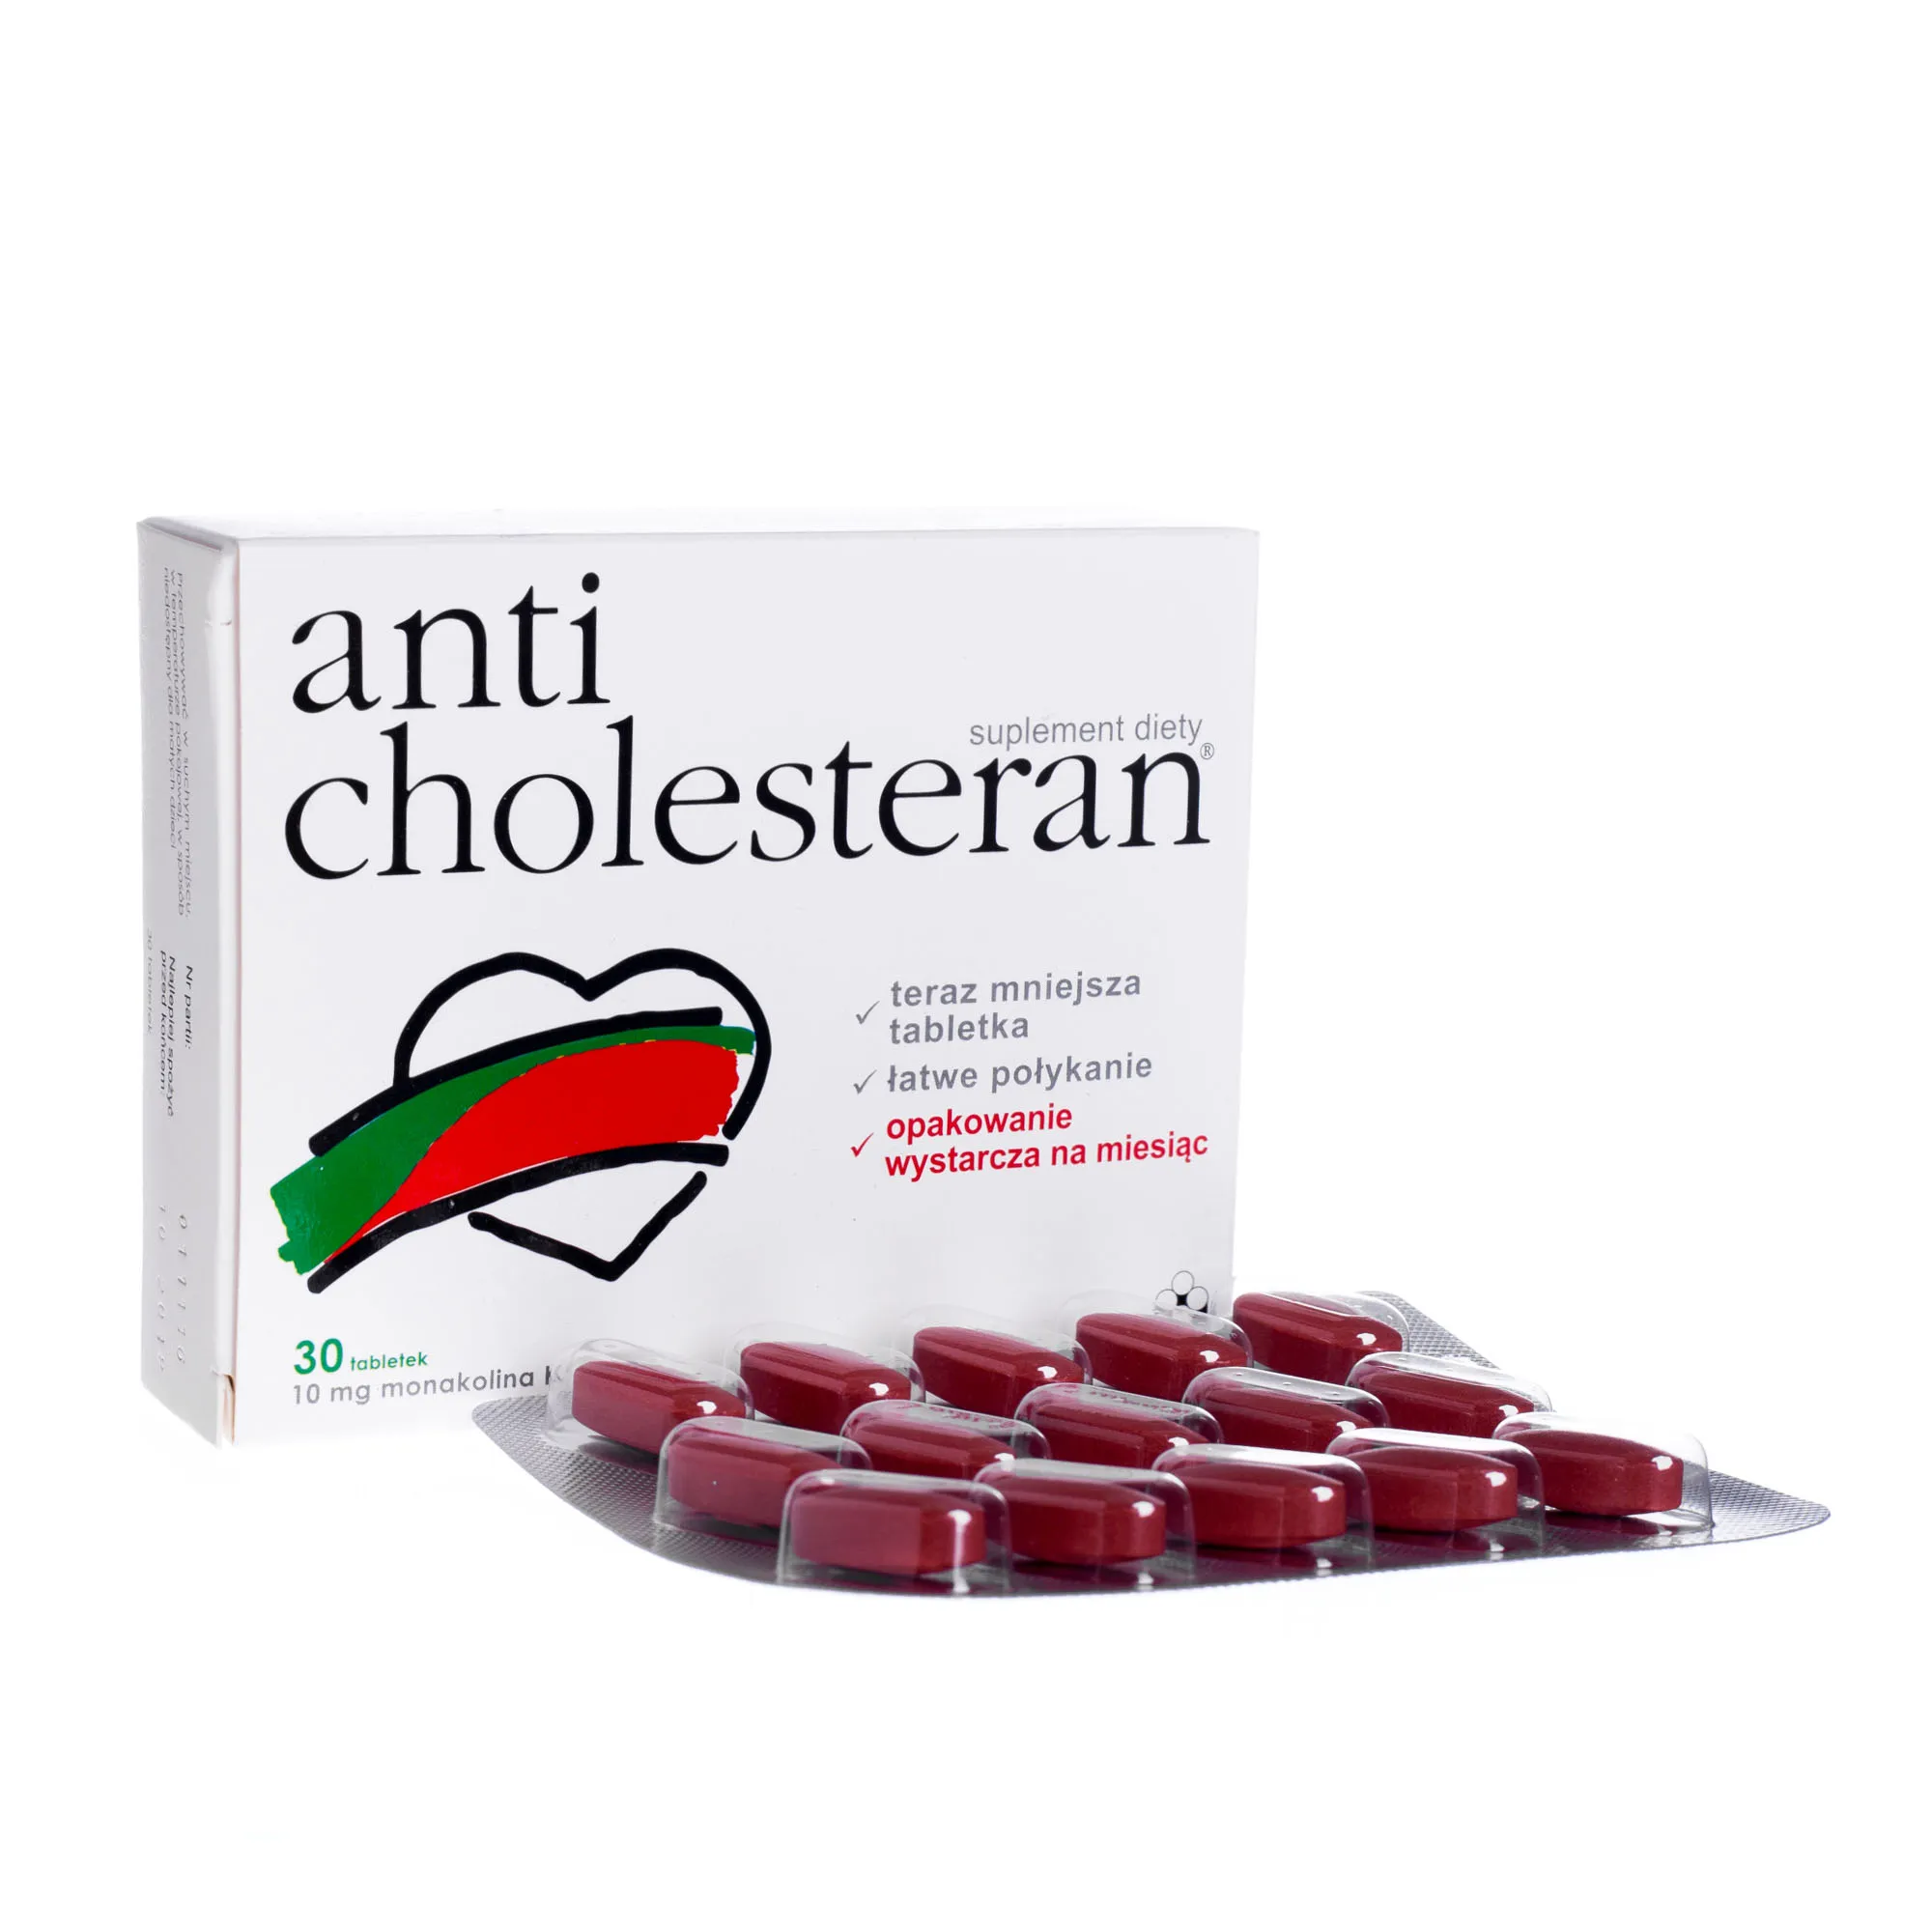 Anticholesteran, suplement diety, 30 tabletek 